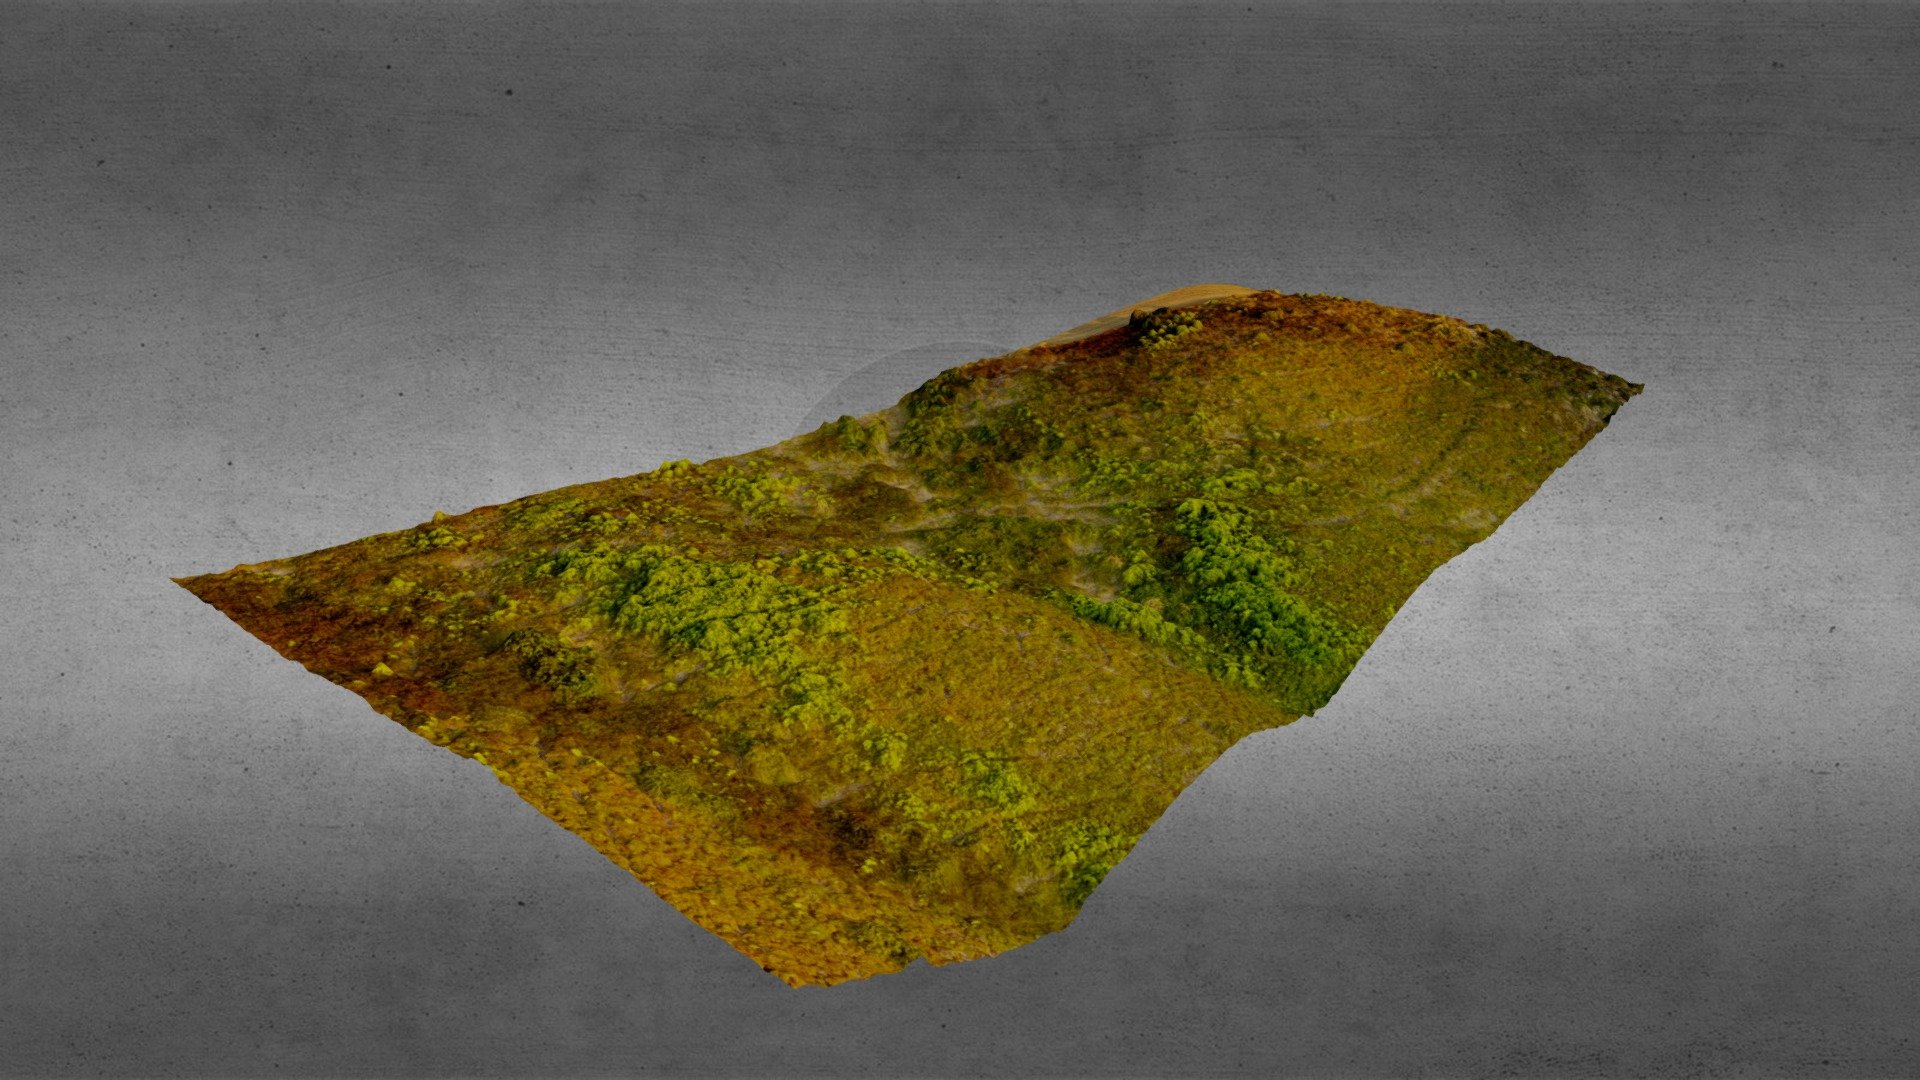 Terrain 3D Model of vegetated field